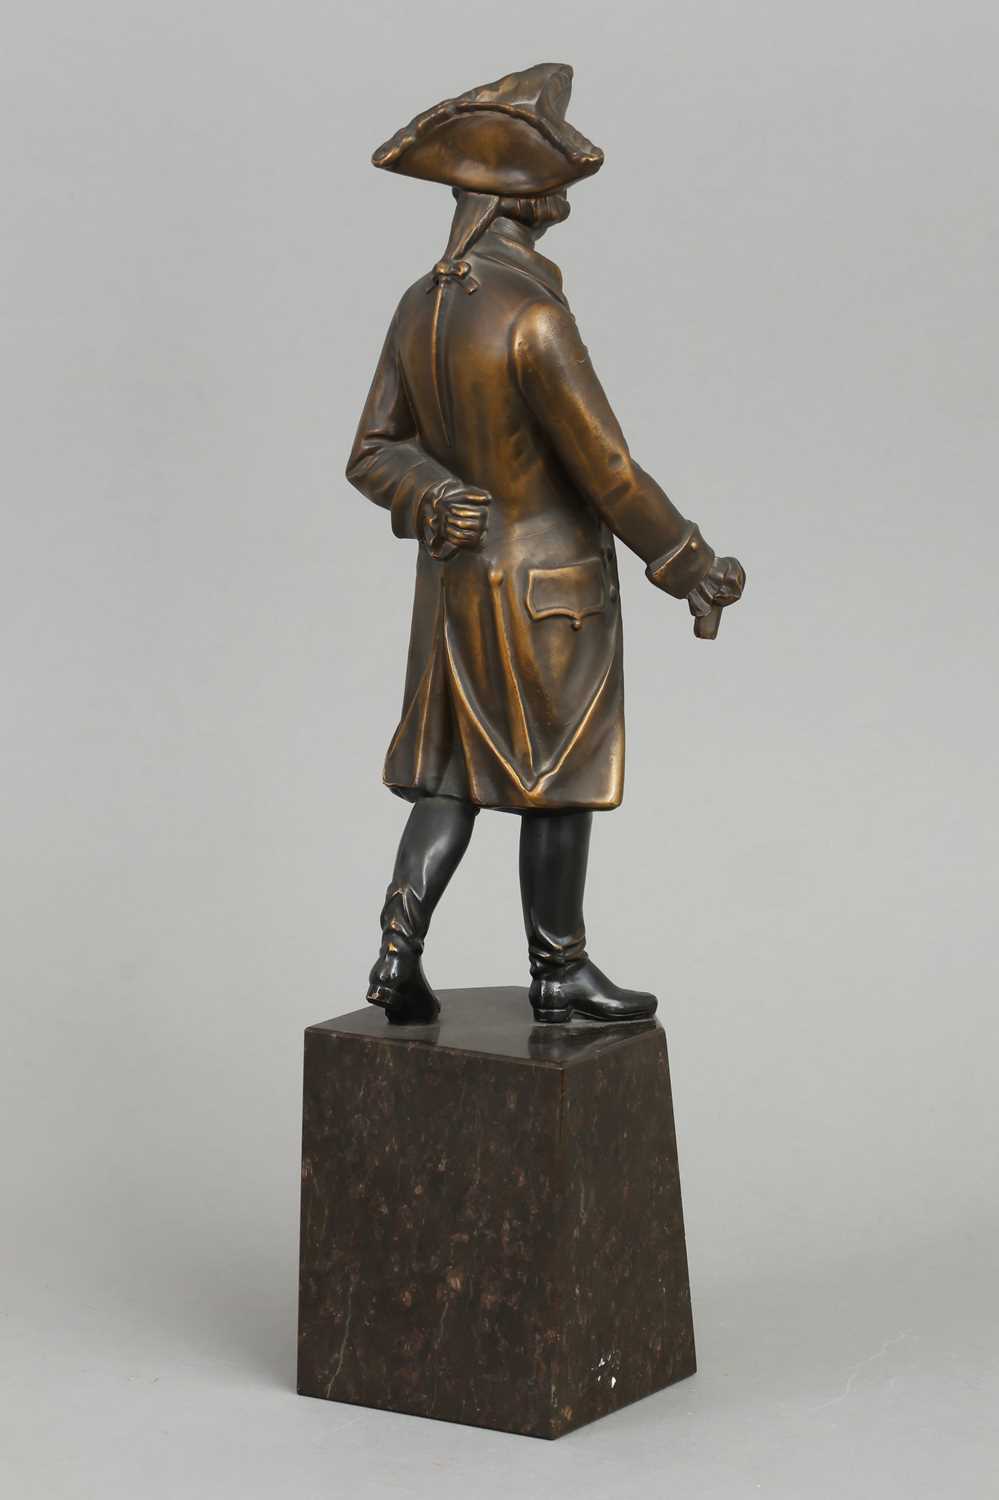 Zinkguss Figur "Friedrich der Große" - Image 3 of 3